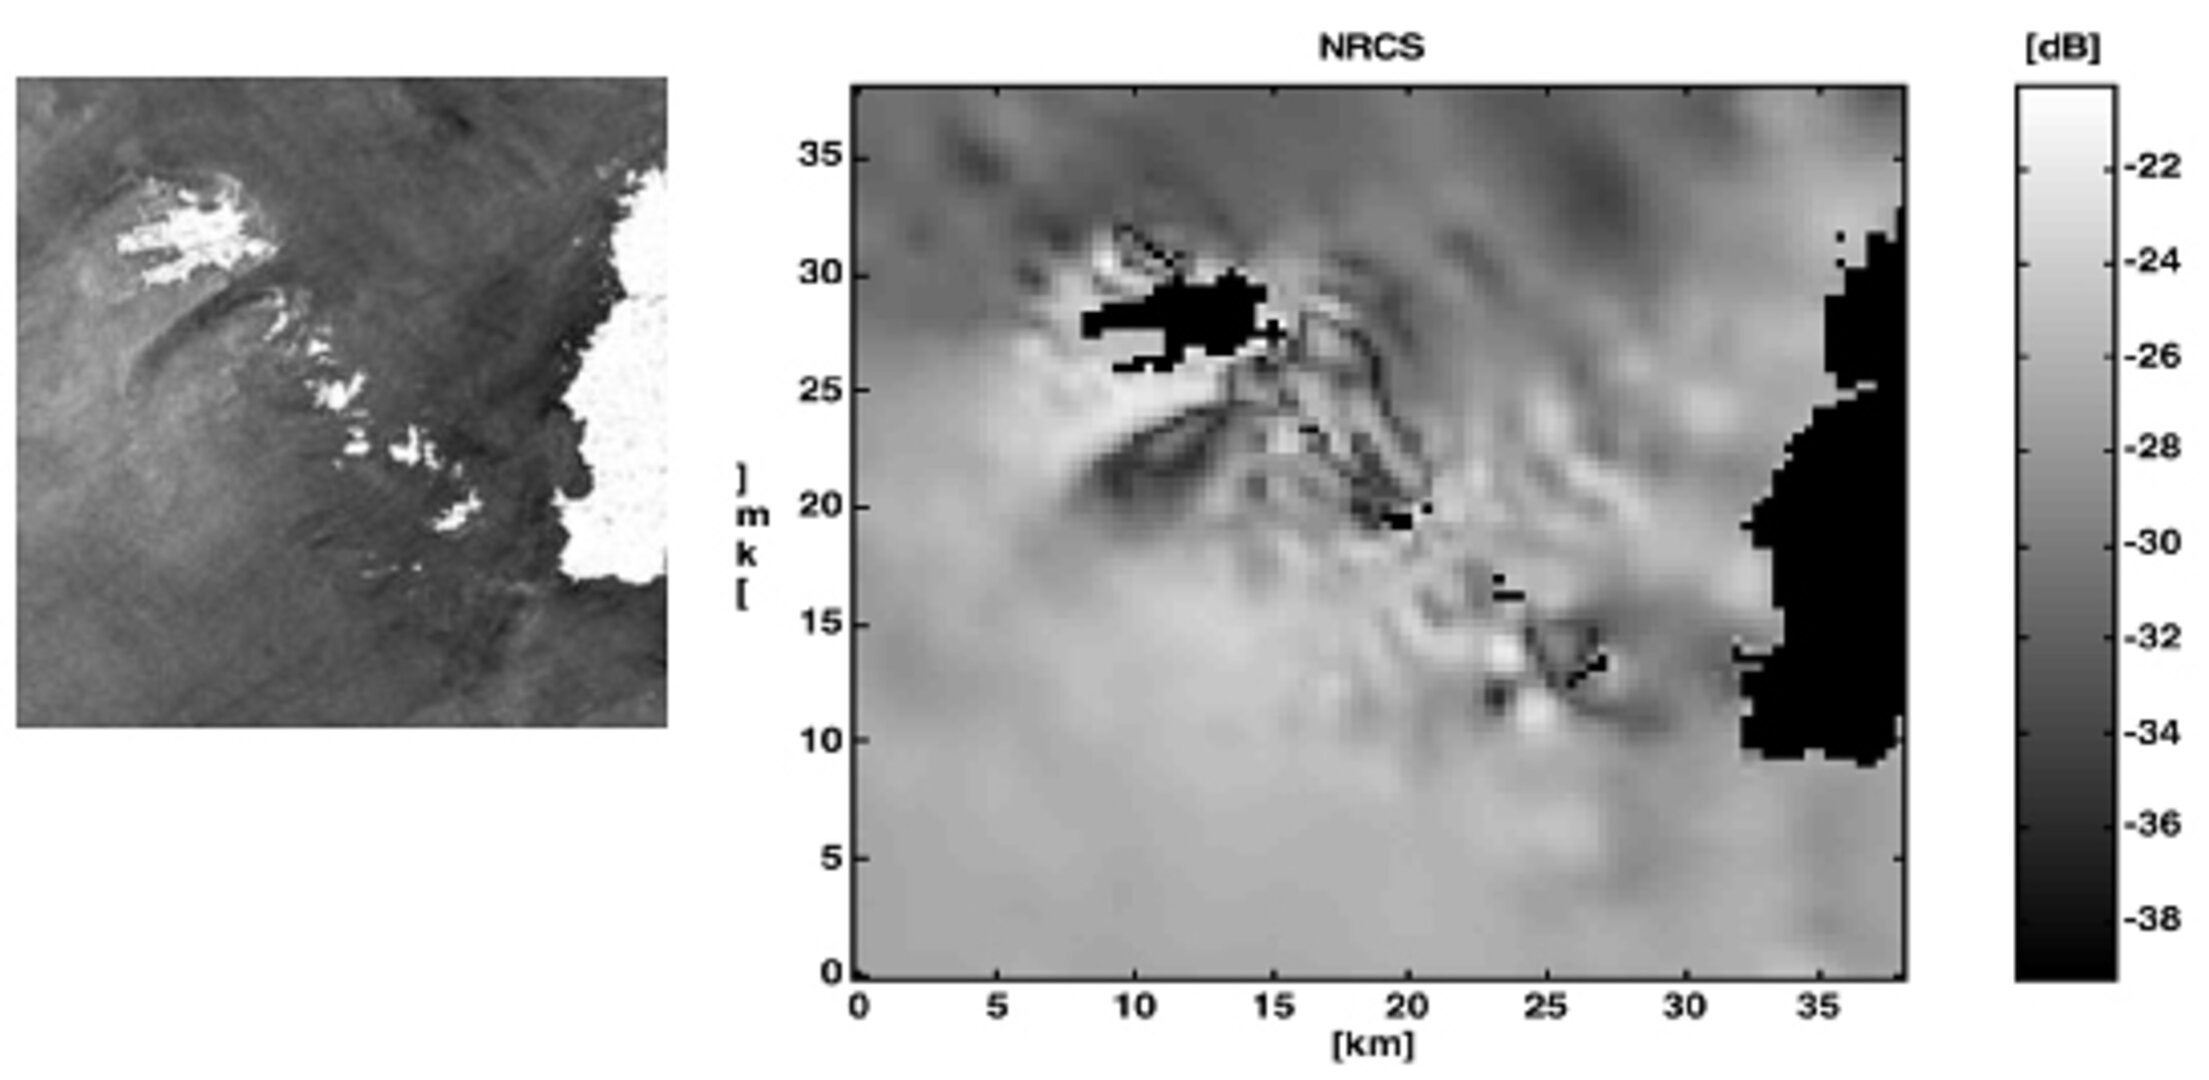 Radar imaging modelling (RIM) of tidal currents